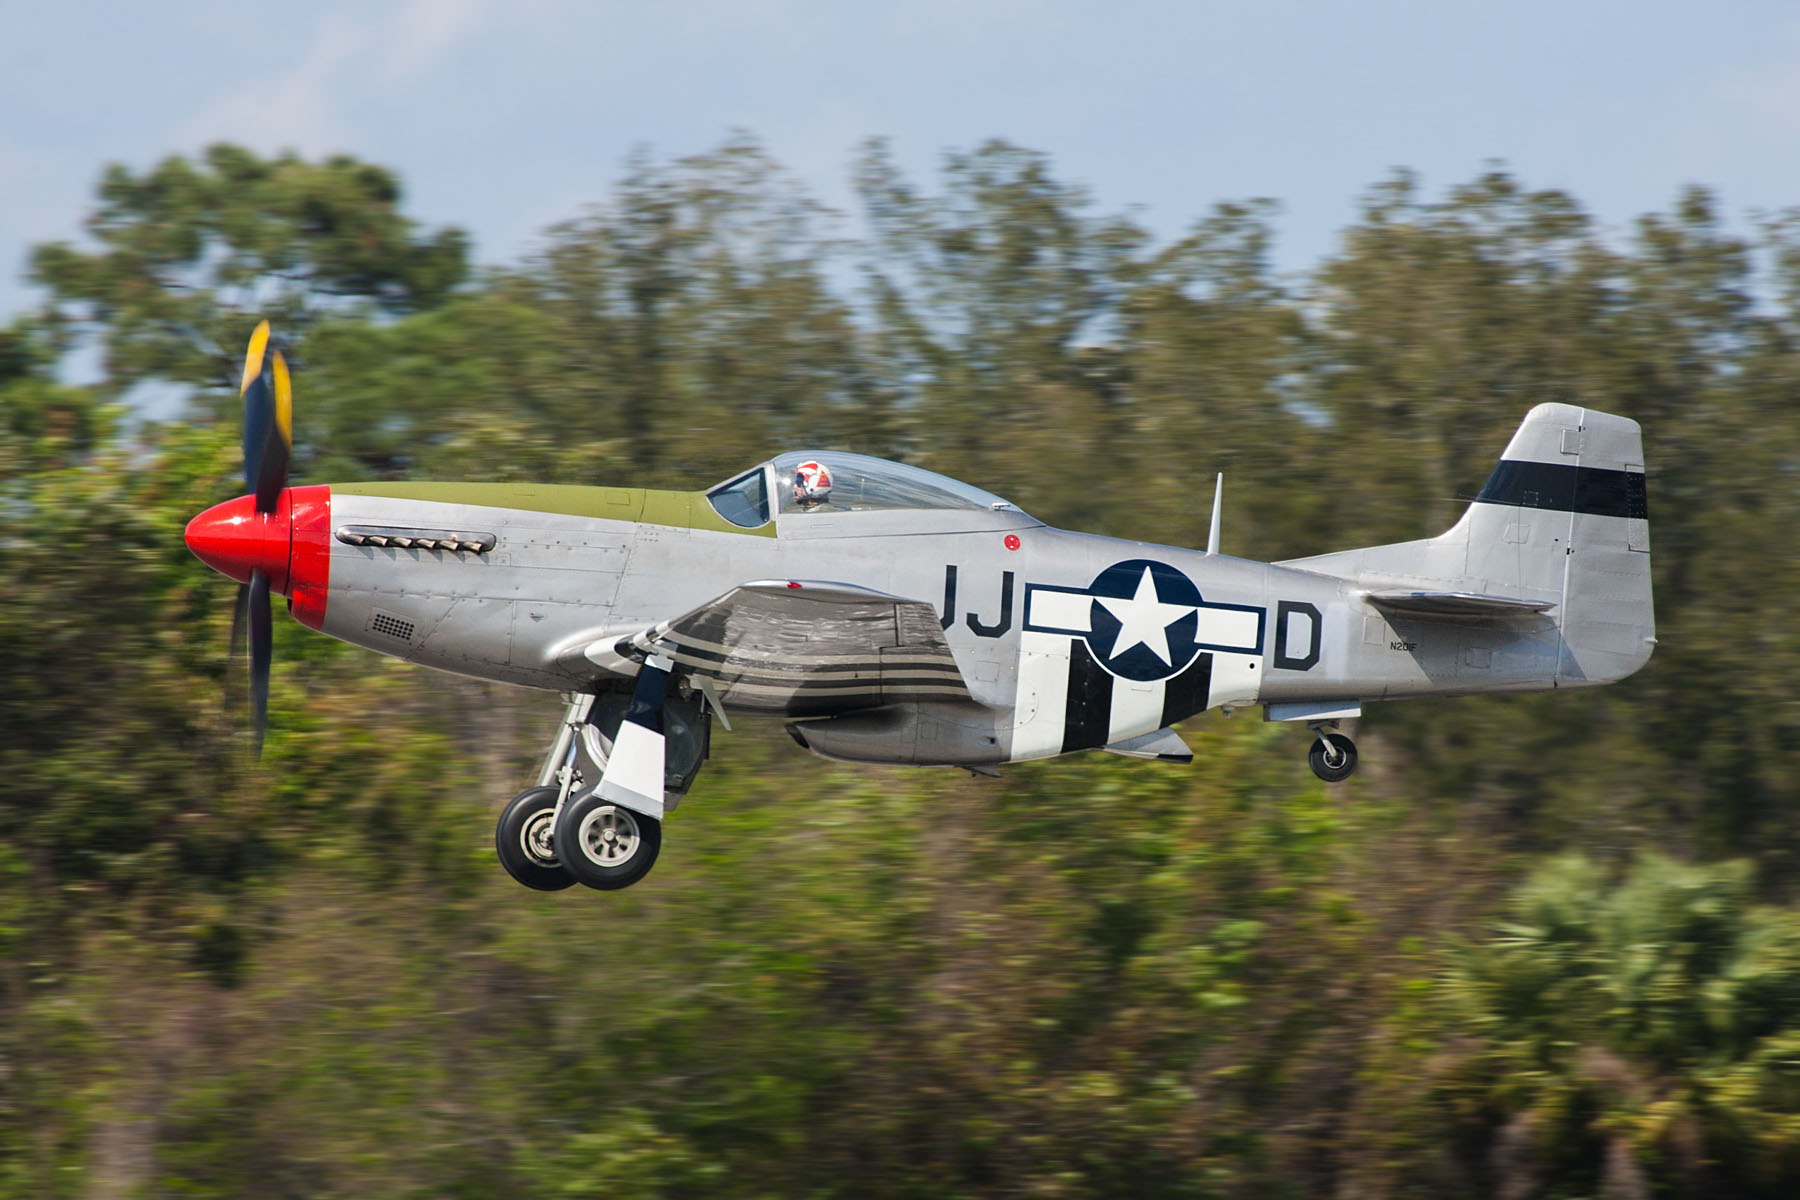 P-51 Mustang, TICO Warbirds Air Show, Titusville, Florida.  Click for next photo.